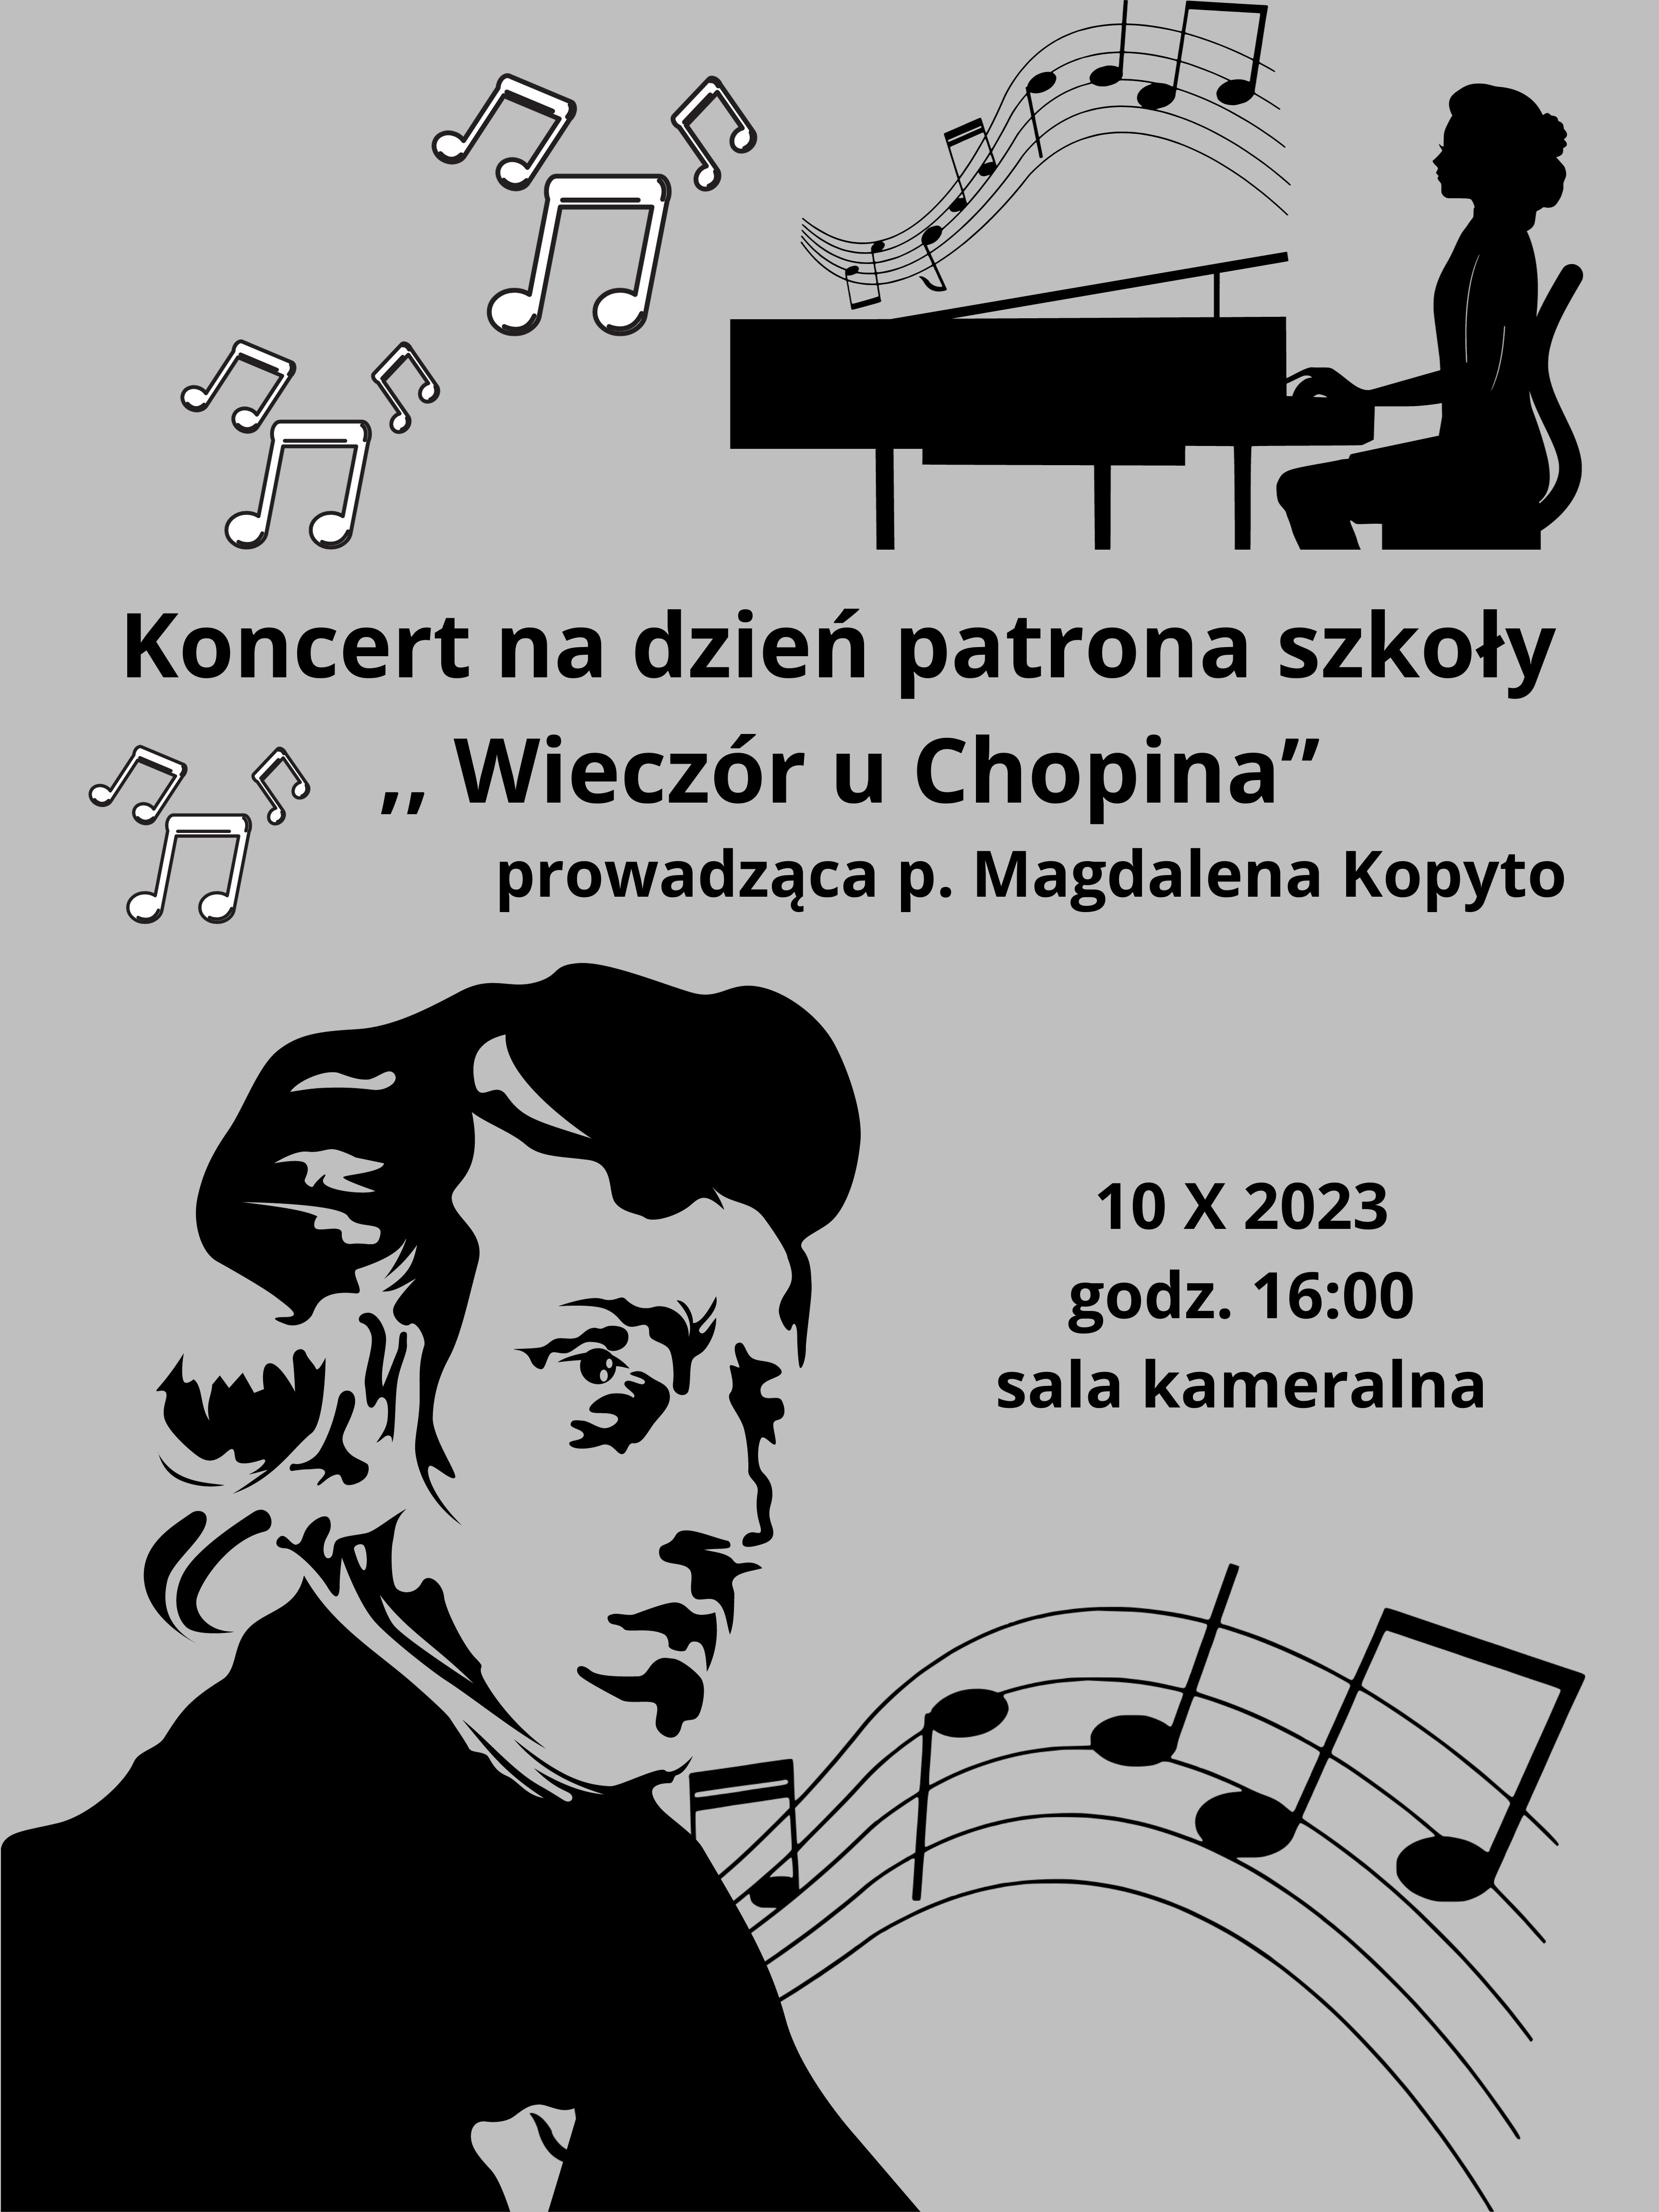 Koncert Wieczór u Chopina